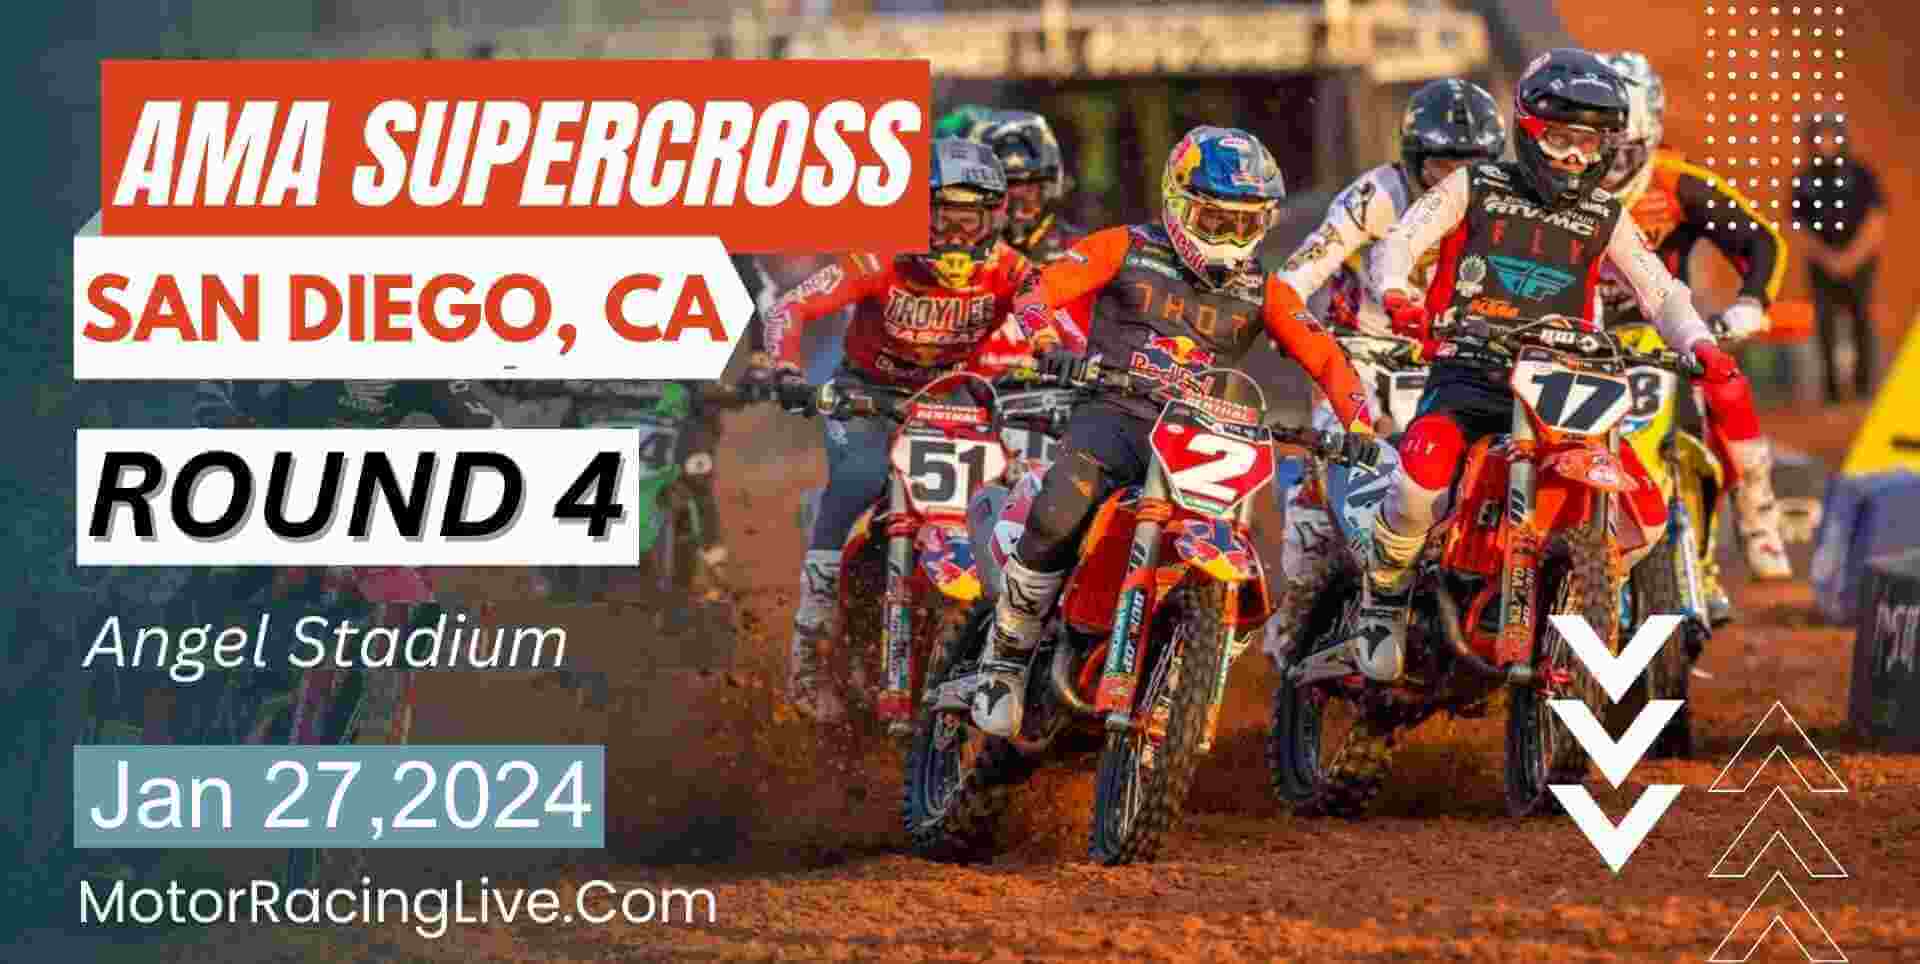 AMA Supercross Anaheim 2 Live Stream